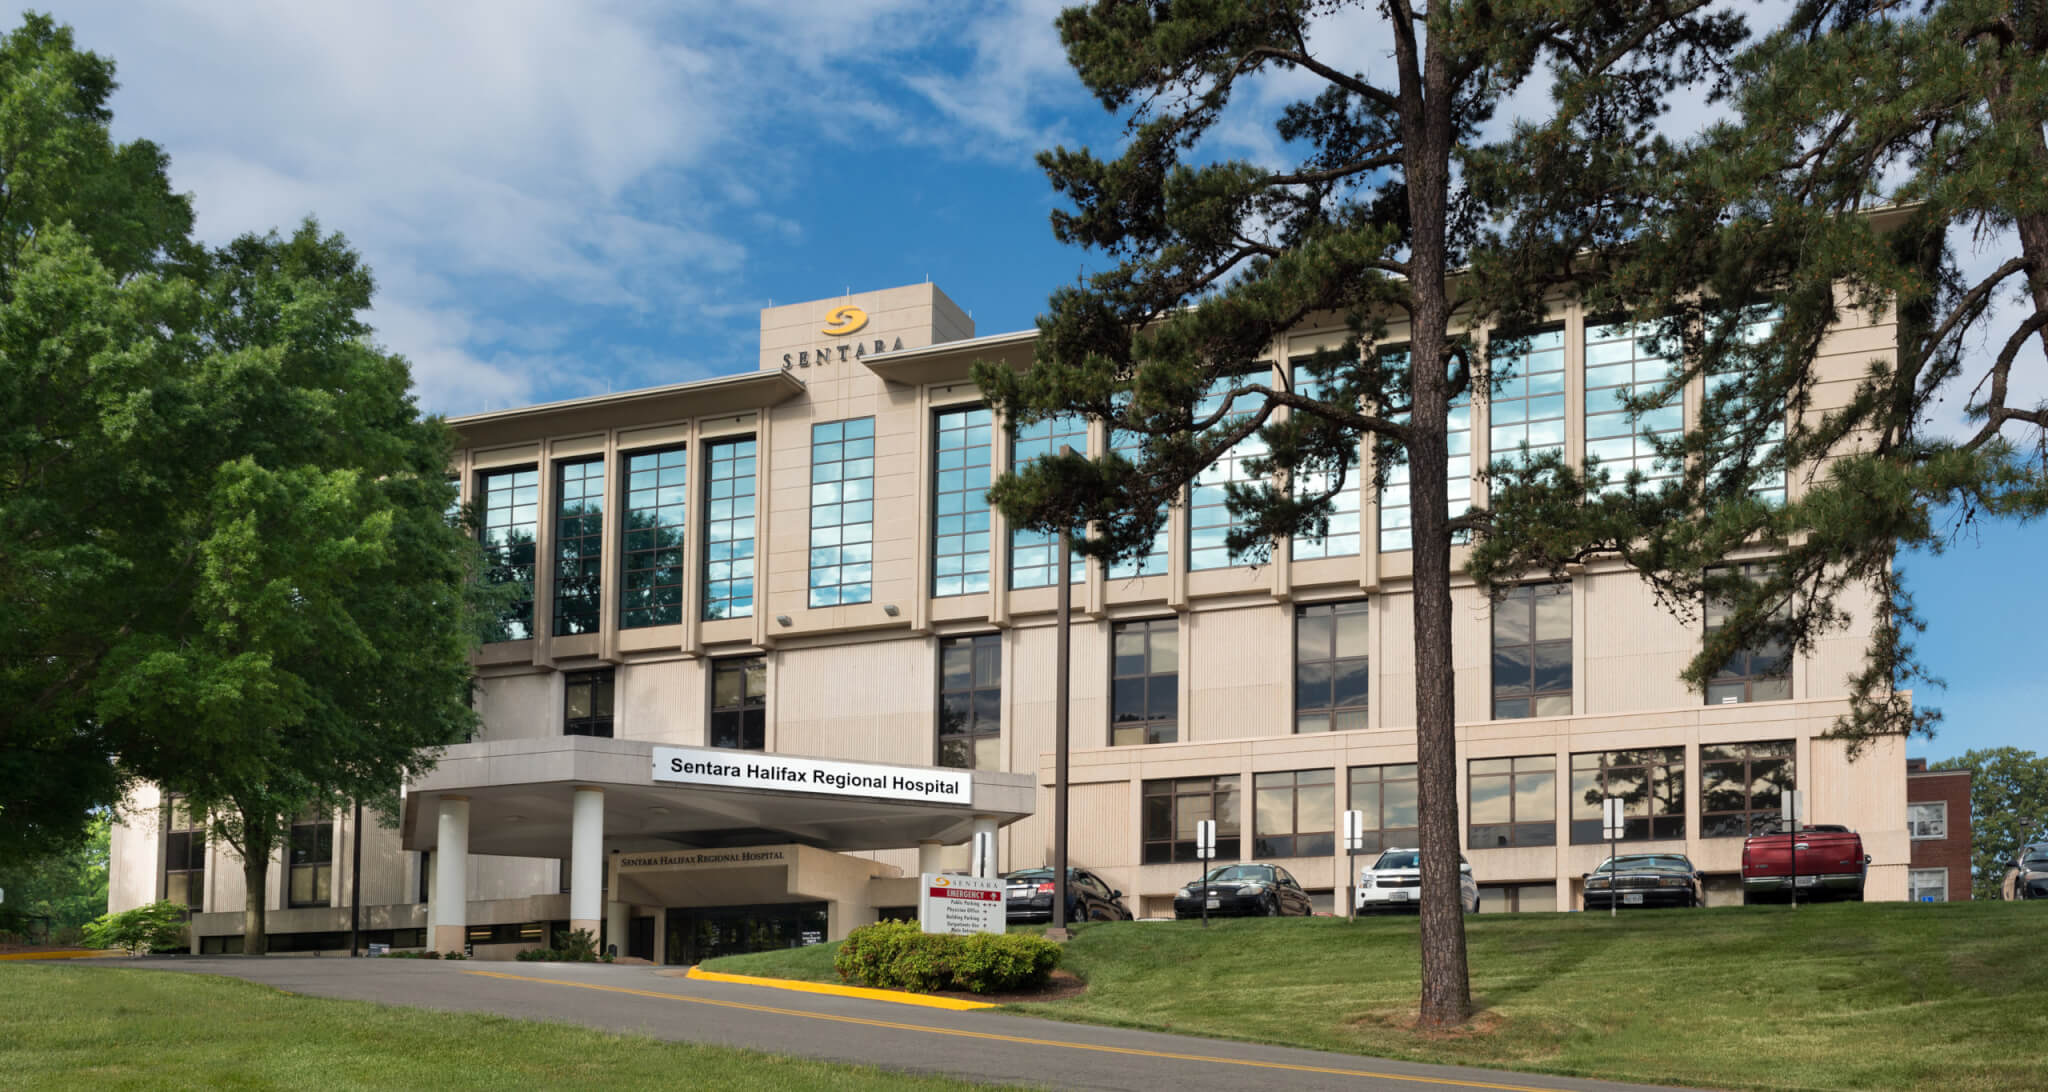 Halifax Regional Hospital